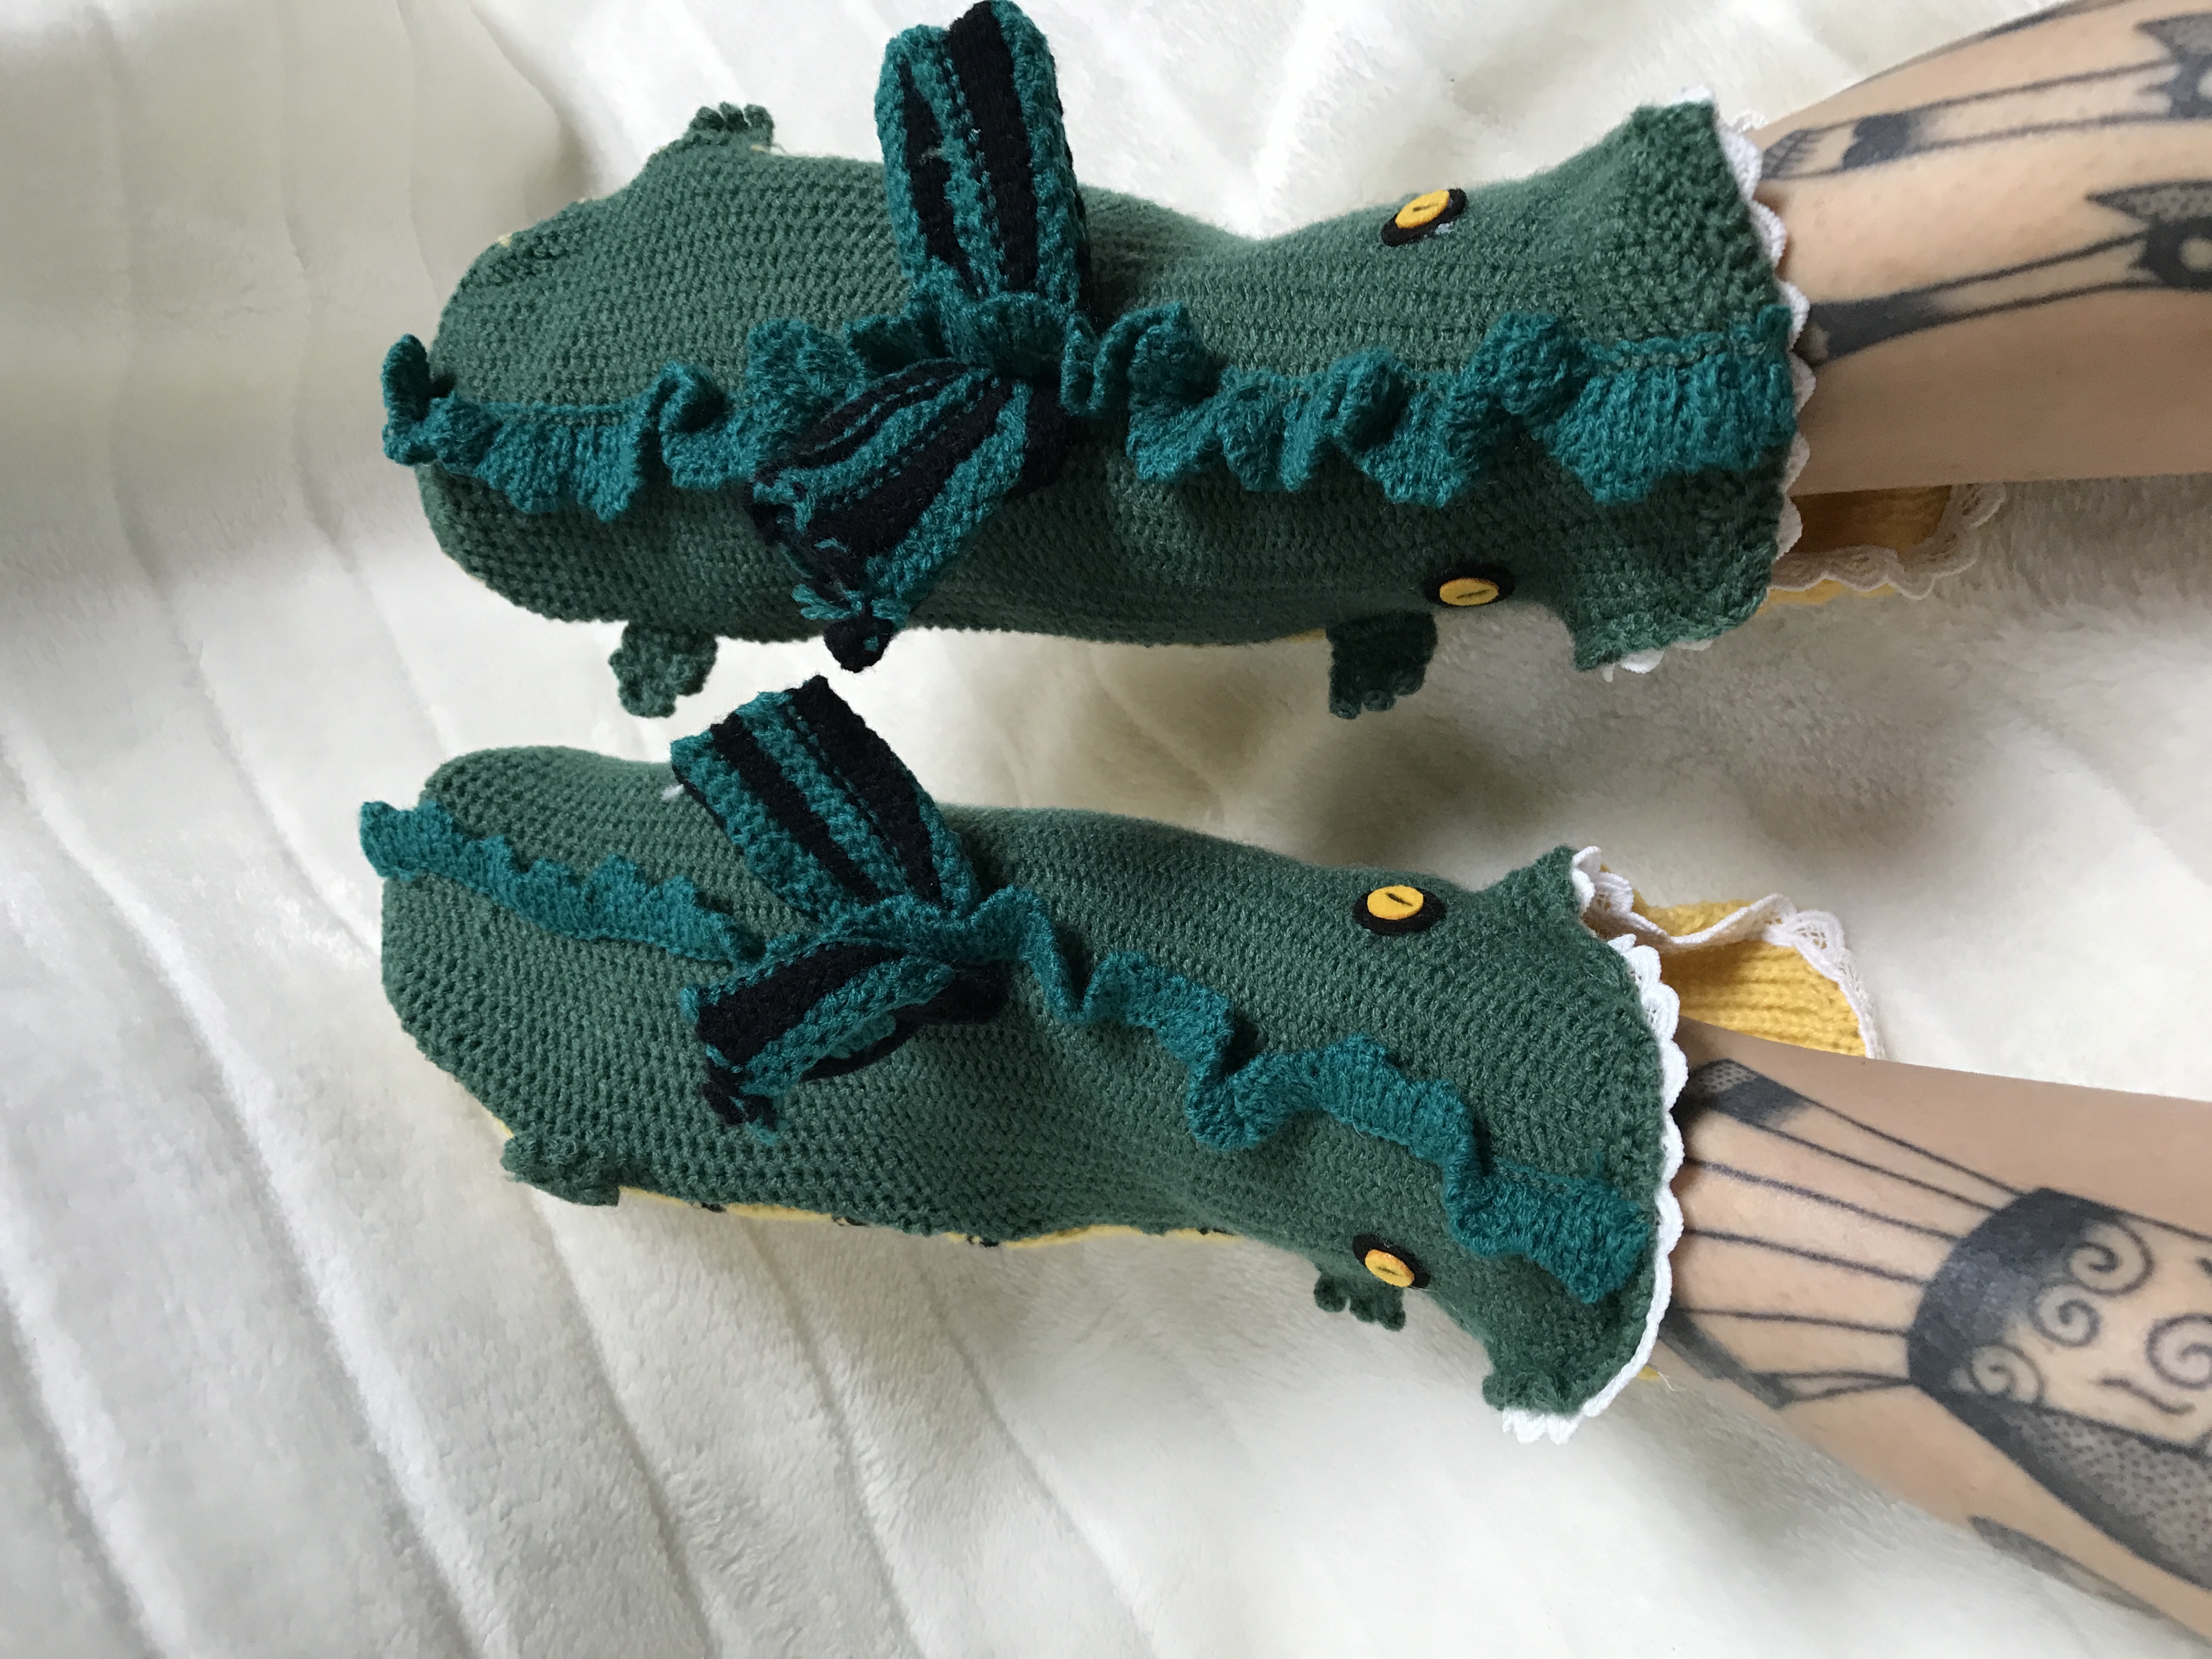 Chaussettes originales animal dragons verts "Dragon socks"